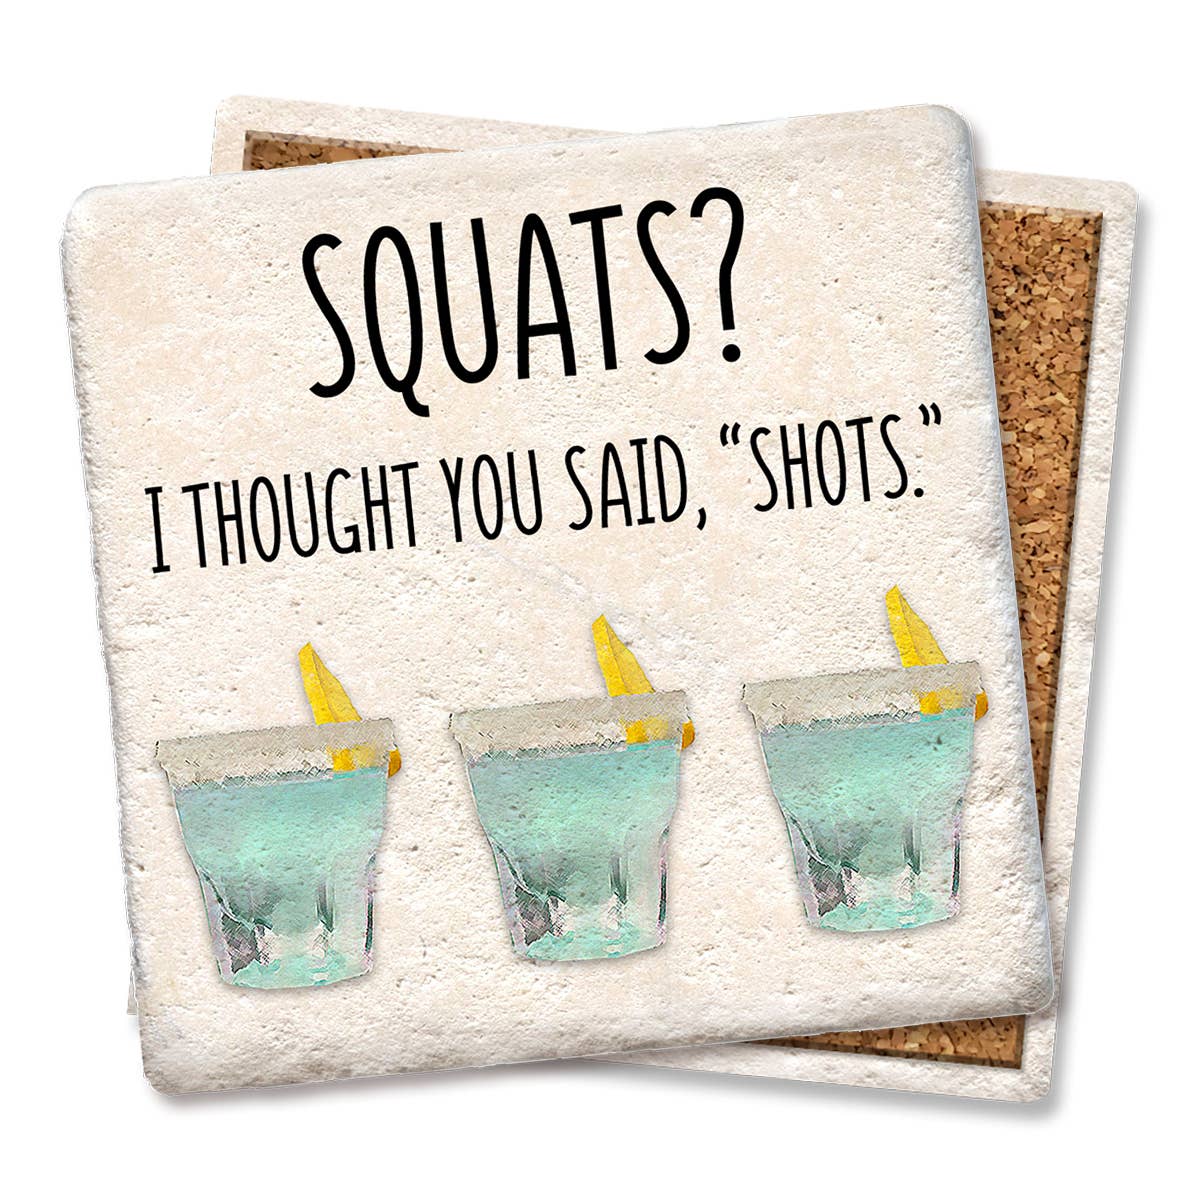 Coaster Squats? I thought you said "shots".